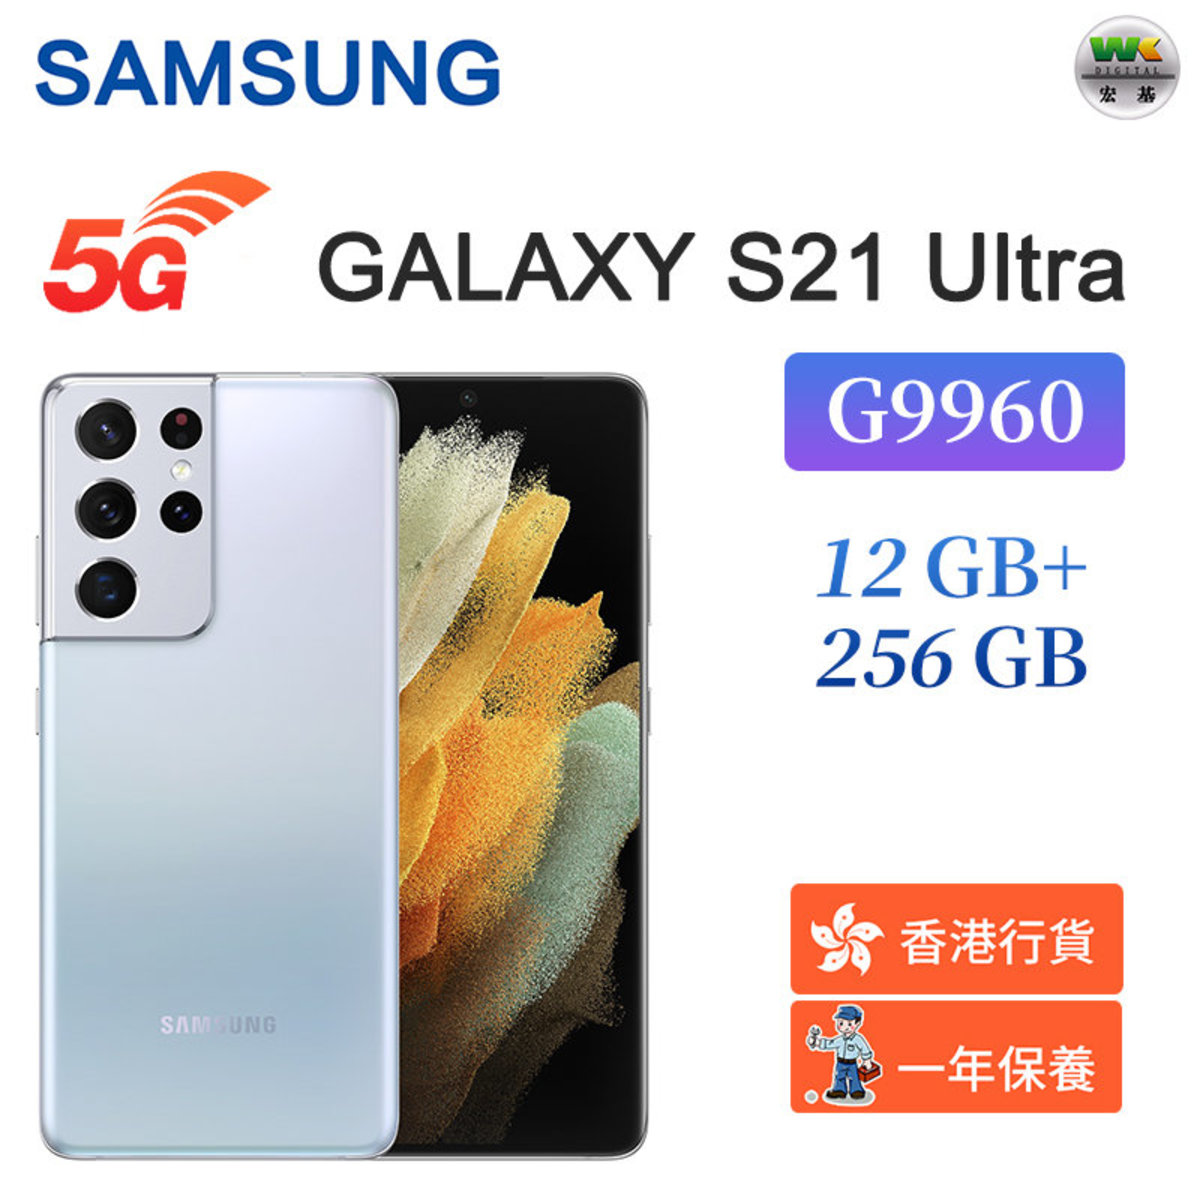 Samsung | Galaxy S21 Ultra 5G G9980 (12GB+256GB) - 幻影銀【香港